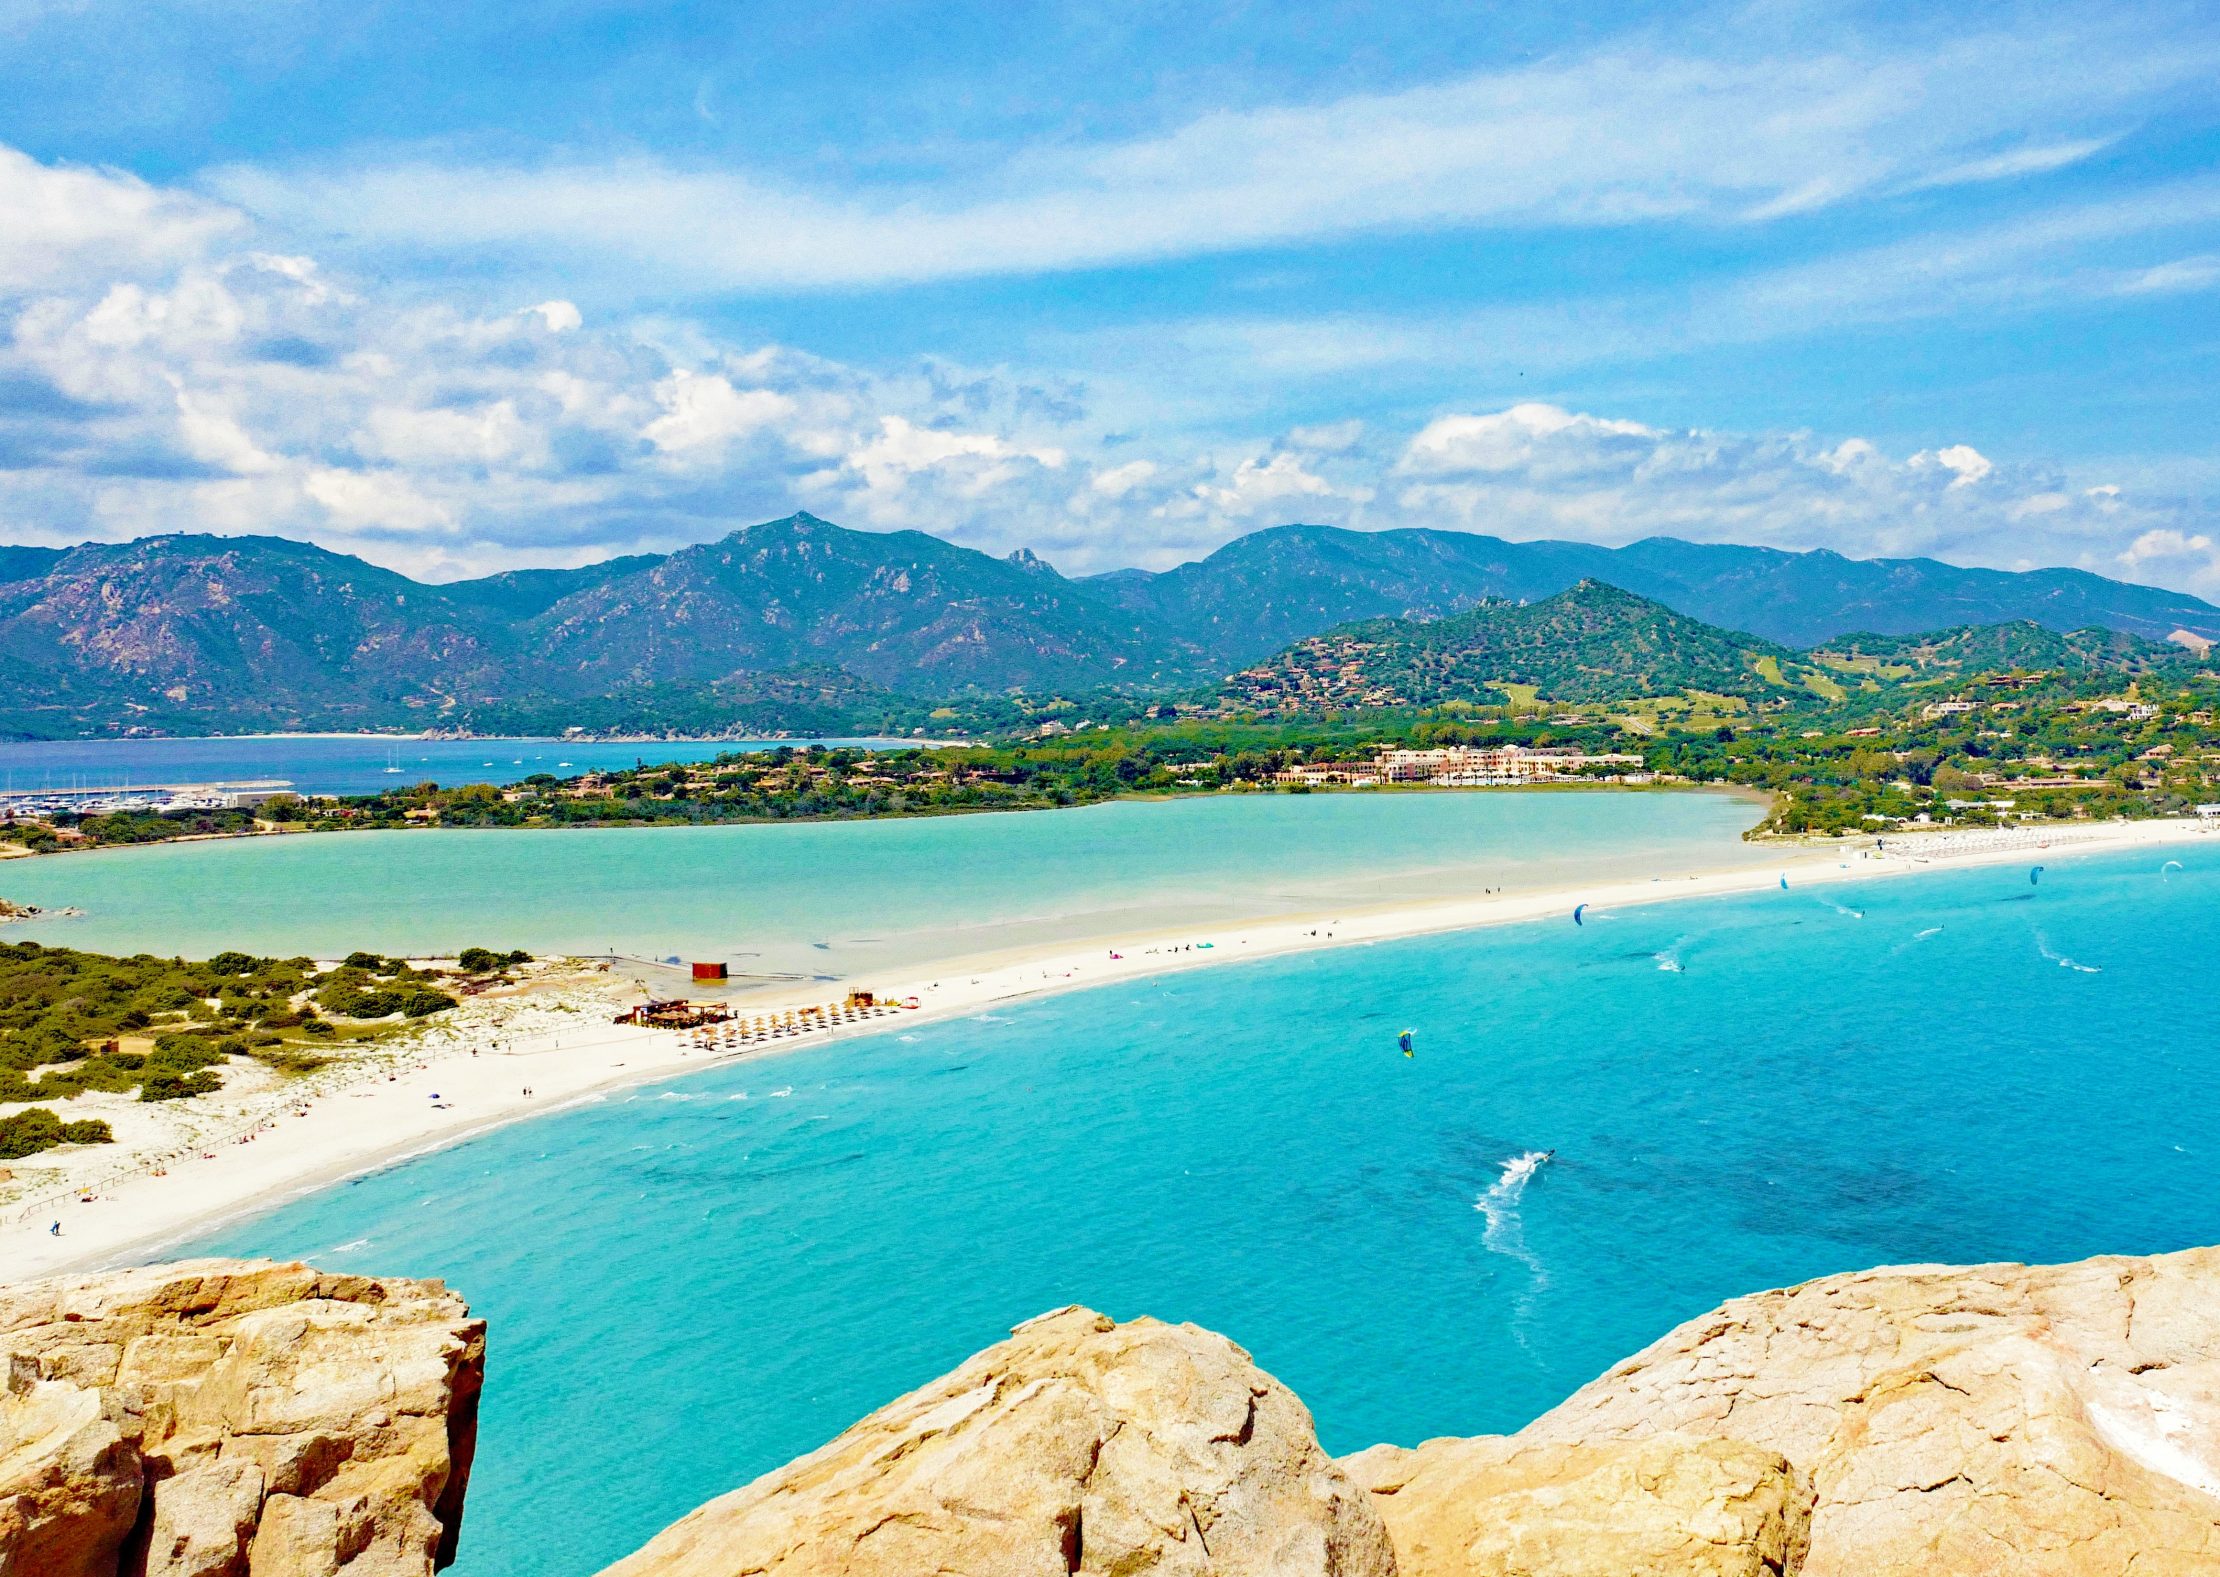 Caribbean beaches in Europe - best beaches in Europe